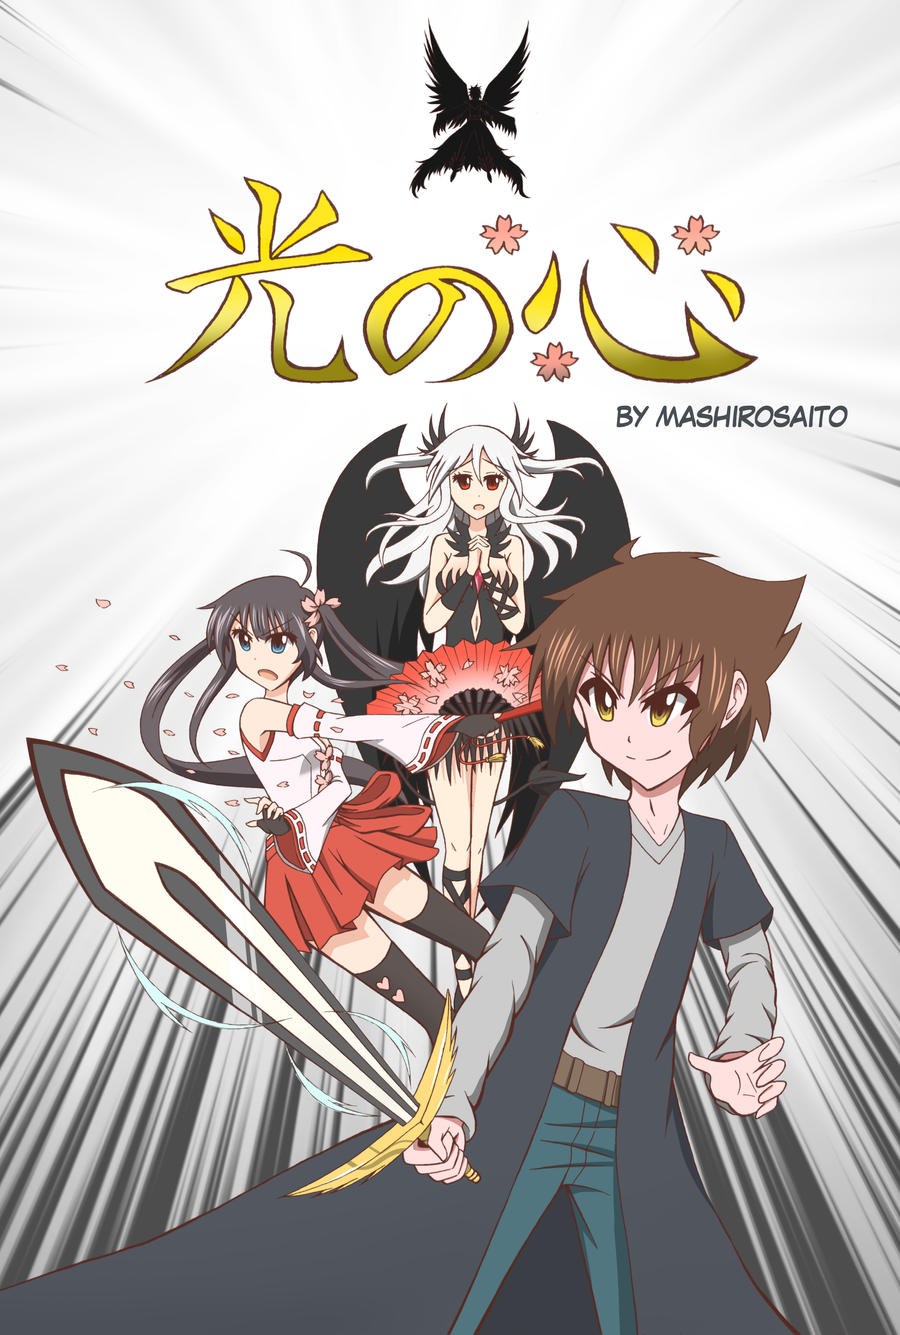 Hikari no Kokoro (Manga) by MashiroSaito on DeviantArt